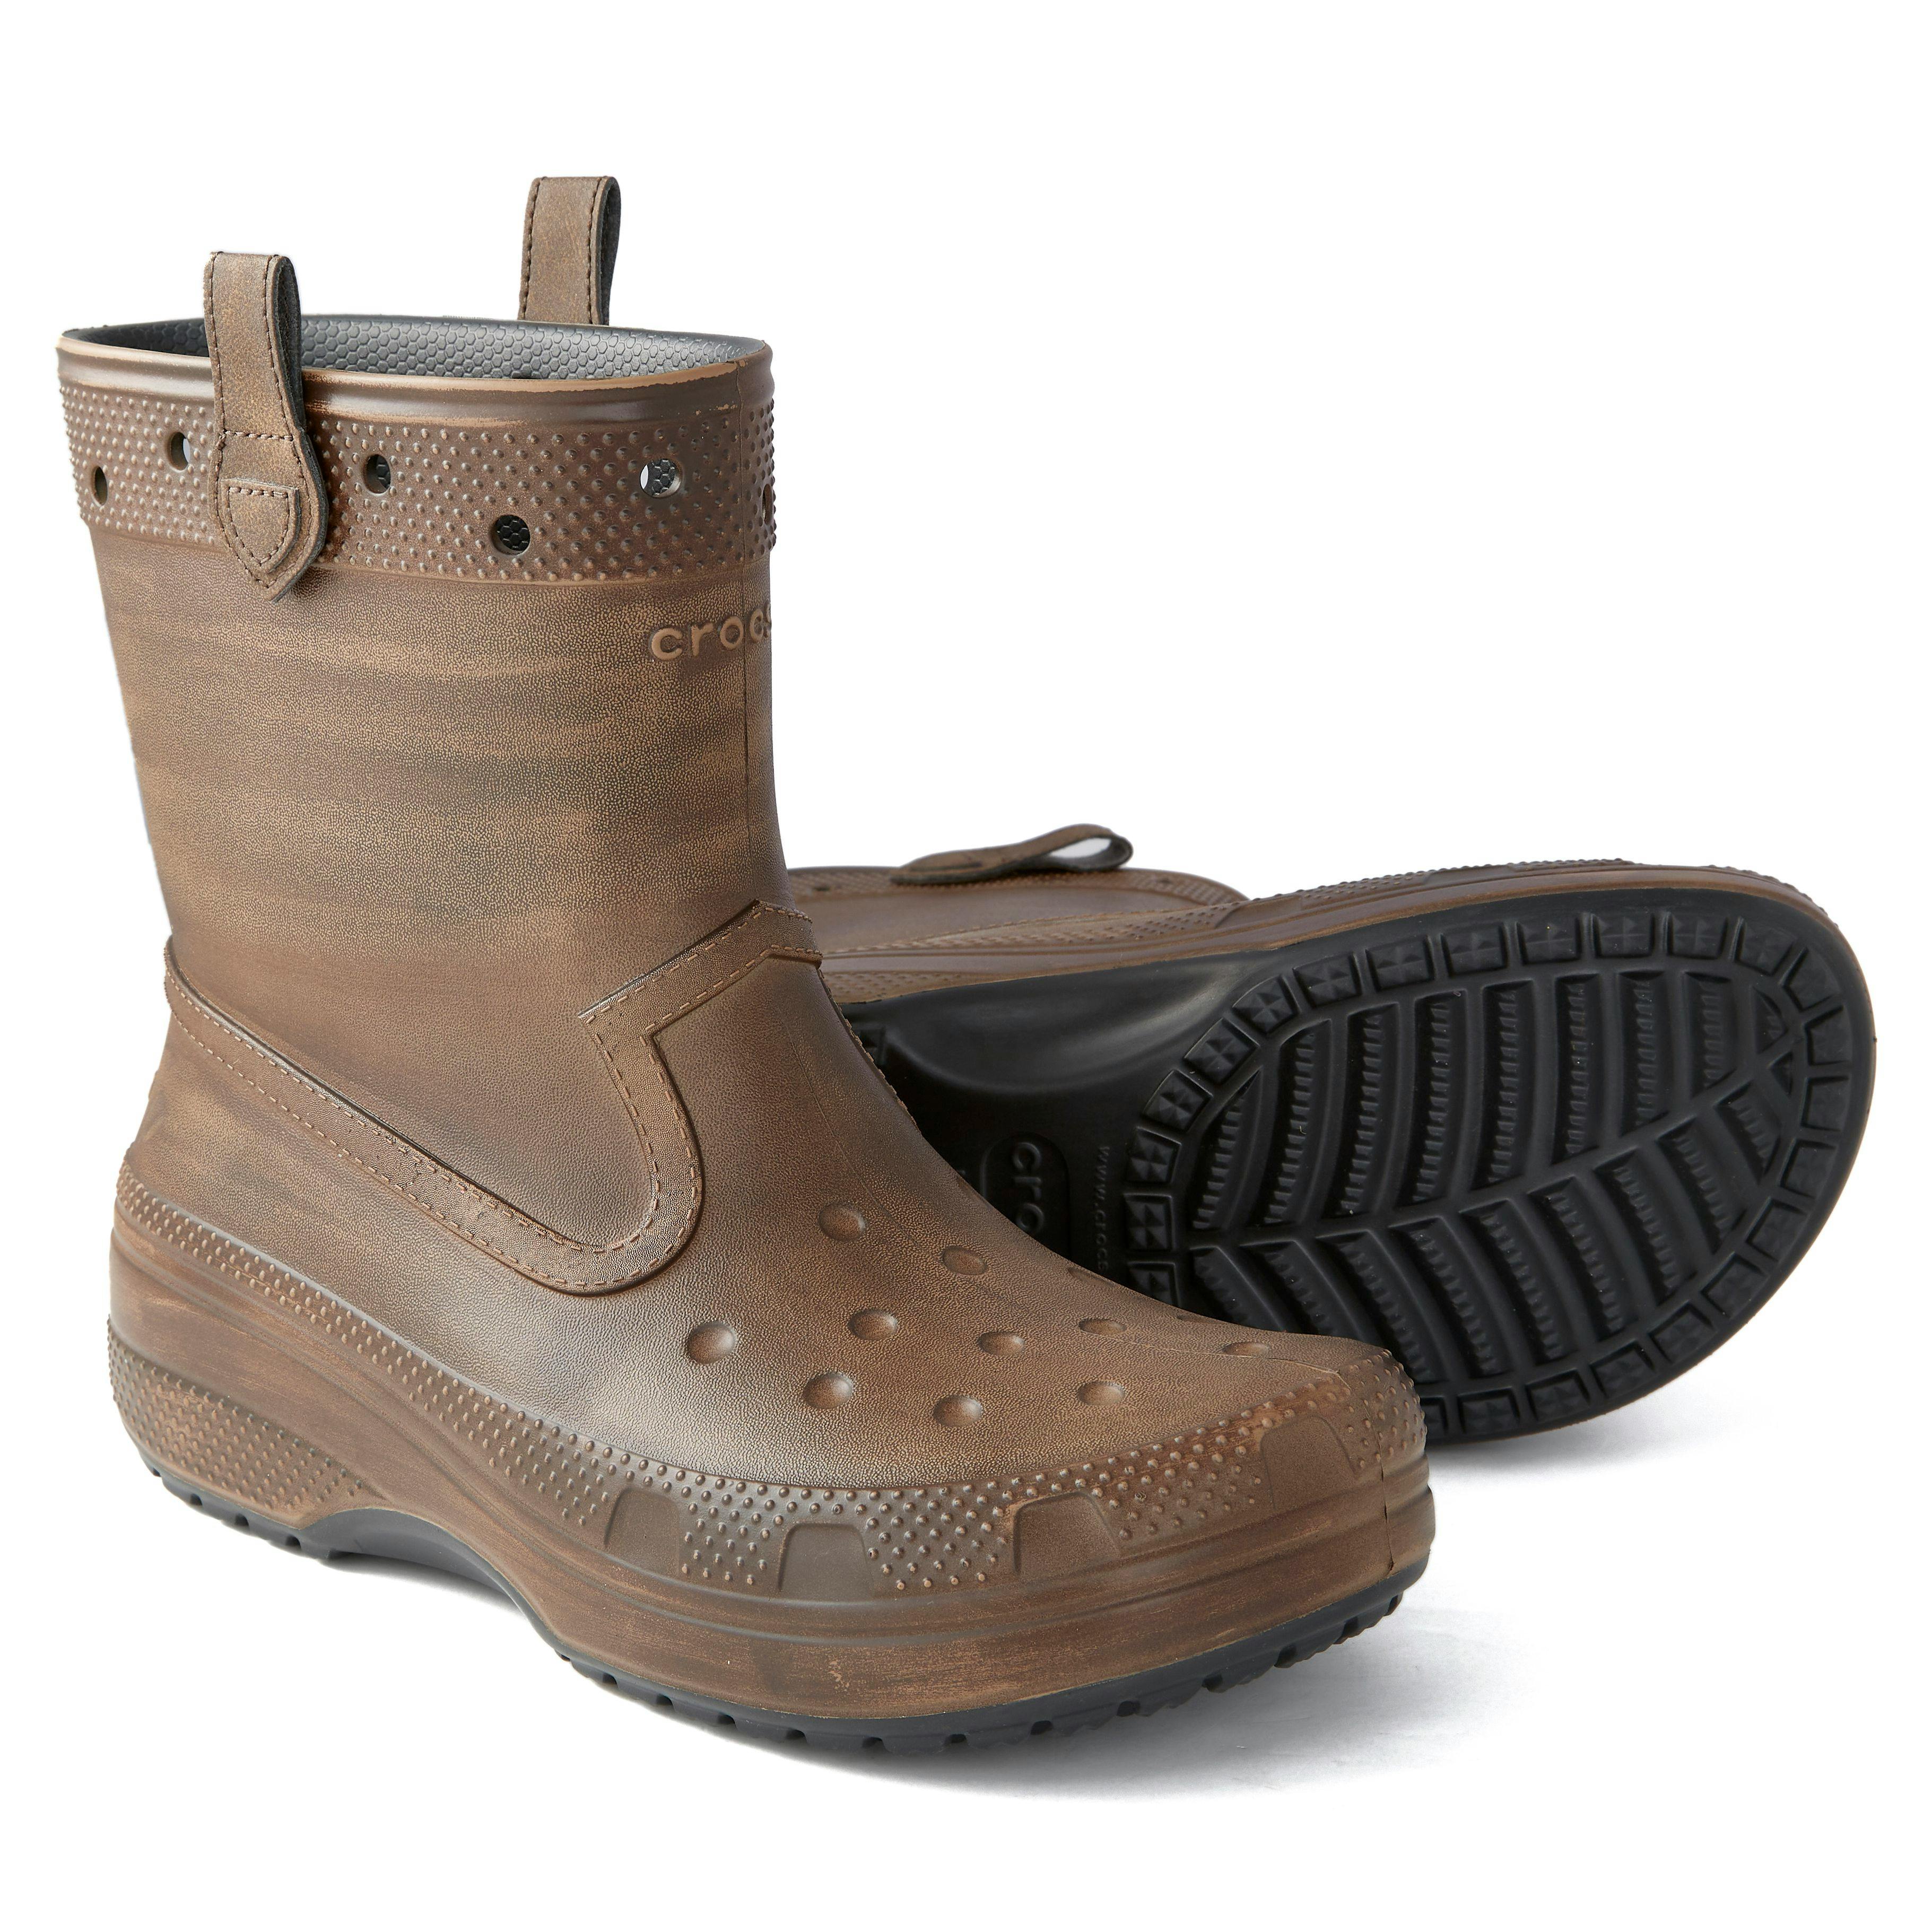 Gods Mary Due Crocs Huckberry x Crocs Classic Western Boot - Brown | Rain Boots |  Huckberry